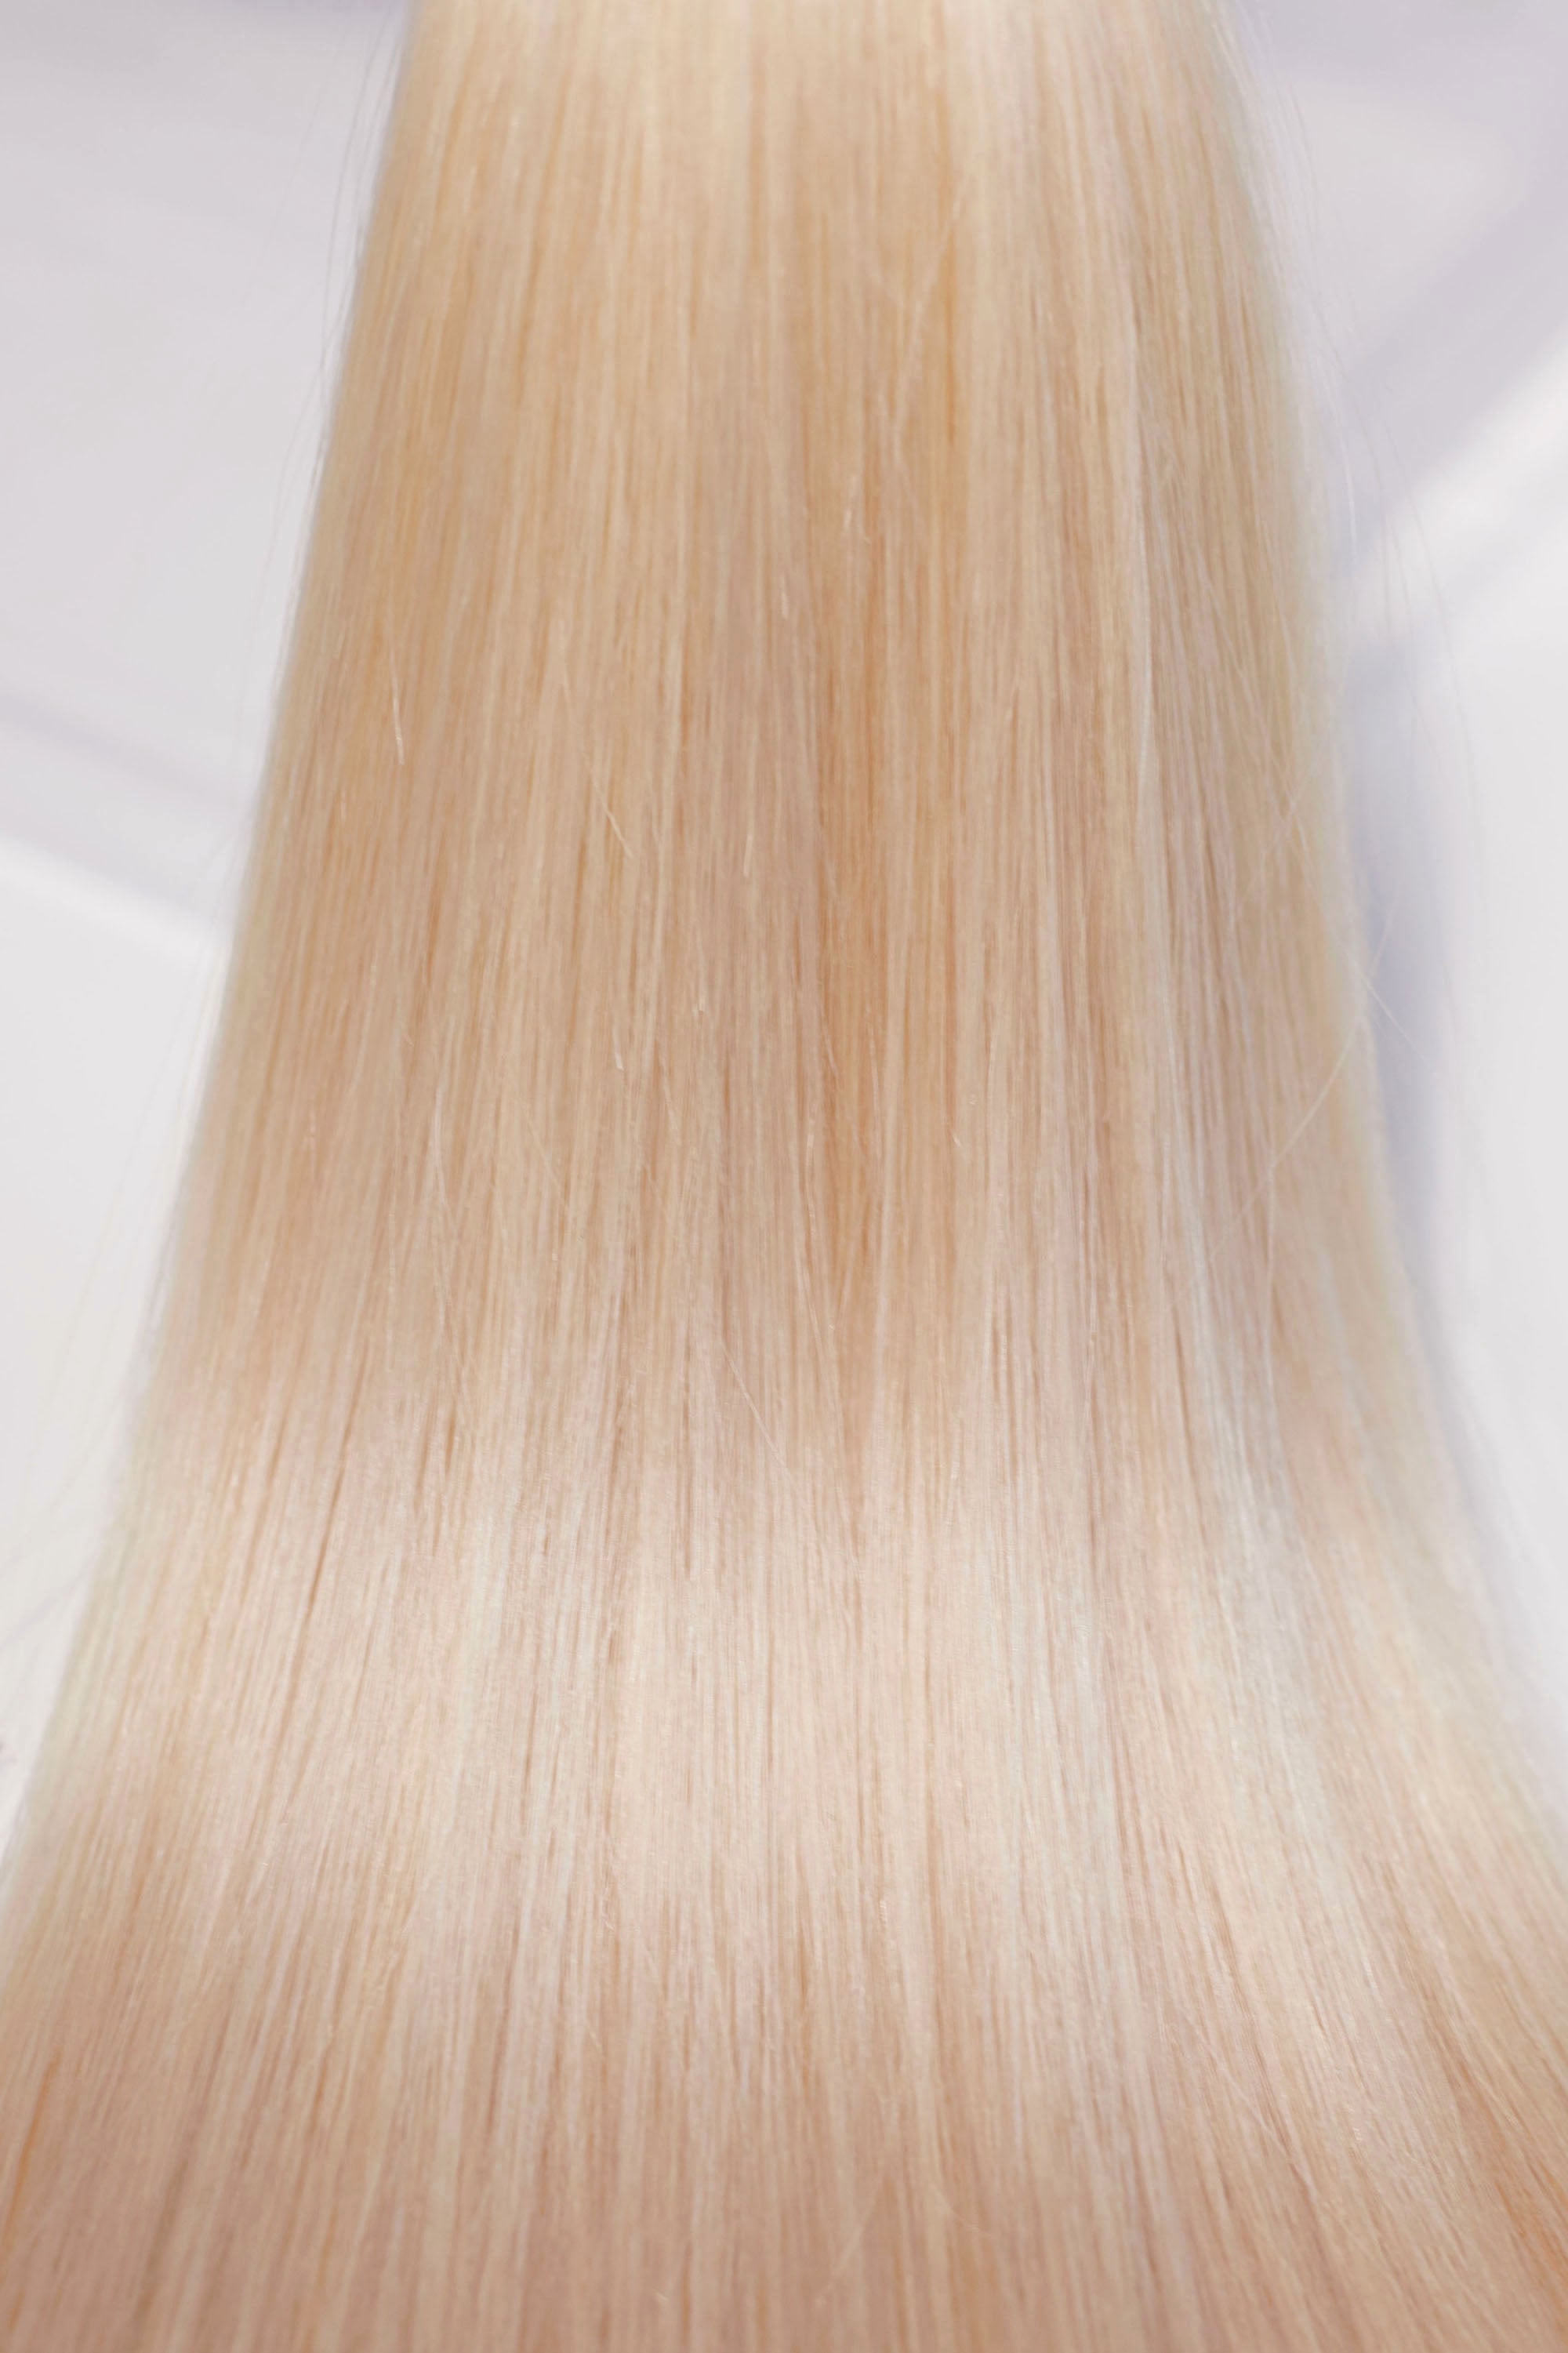 Behair professional Keratin Tip "Premium" 28" (70cm) Natural Straight Platinum Blond #60 - 25g (Micro - 0.5g each pcs) hair extensions